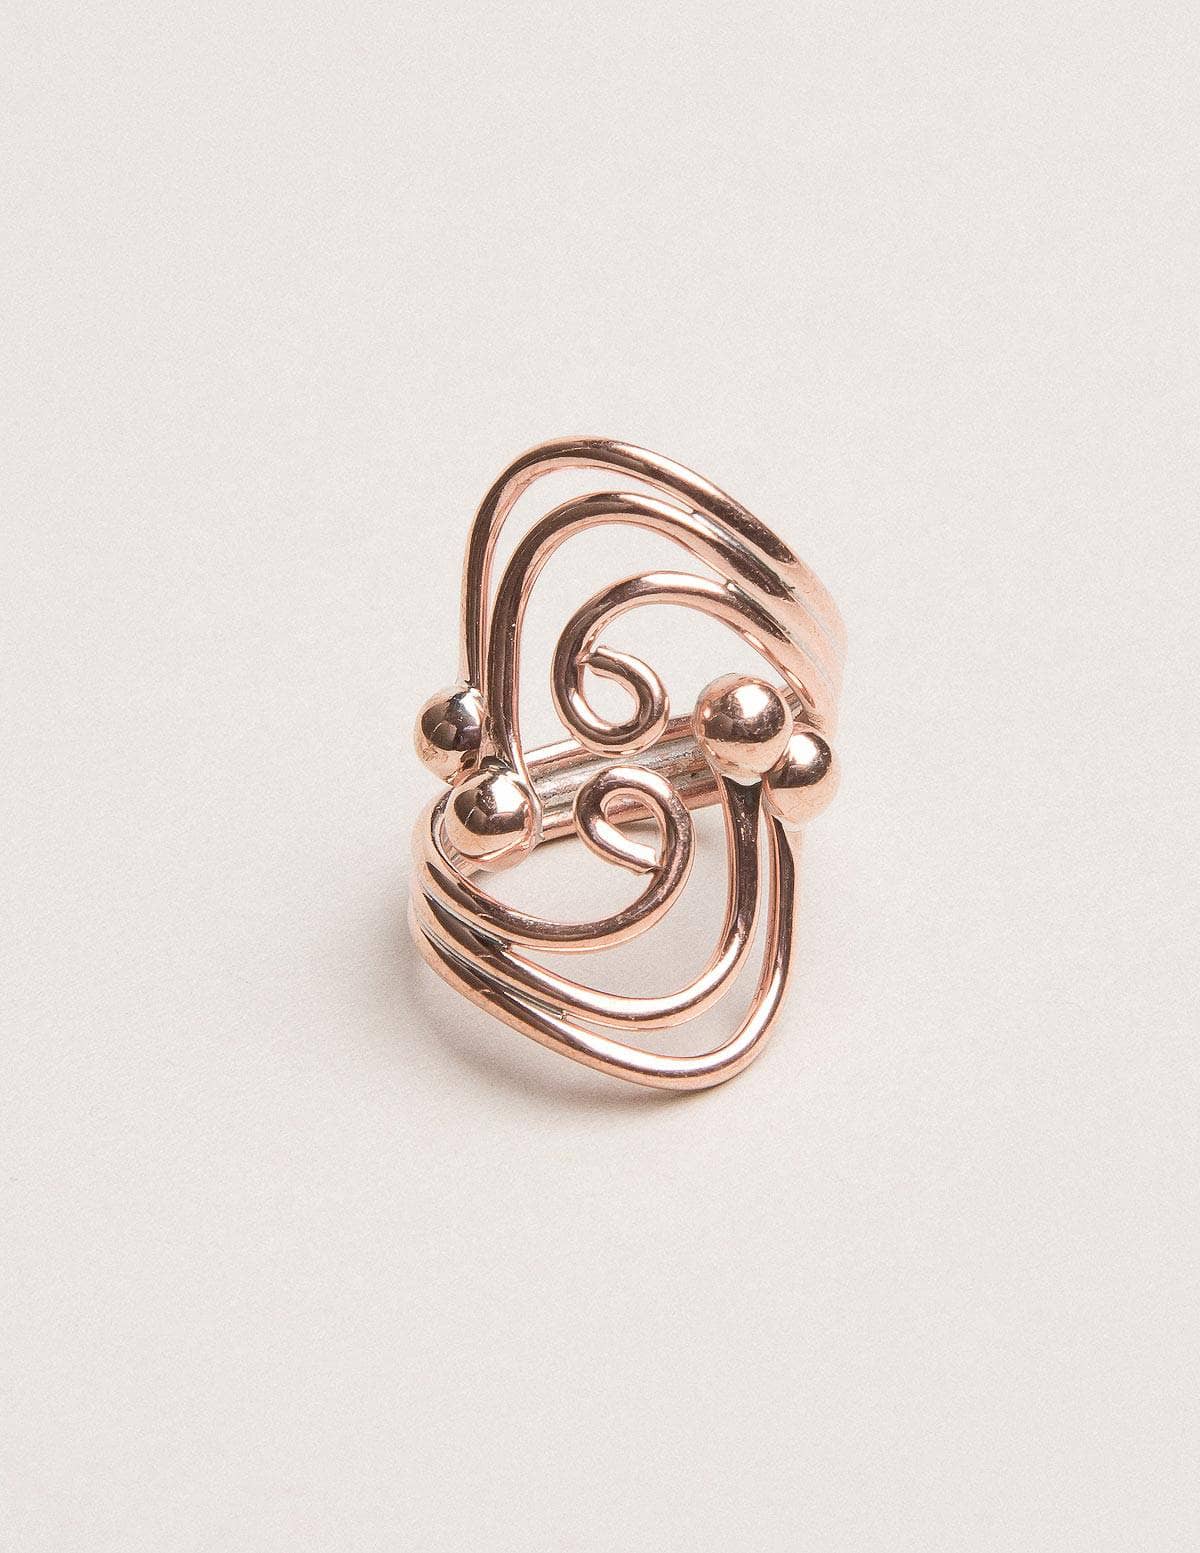 Buy Pure Copper Signet Ring , Men's Copper Square Signet Ring ,solid Copper  Rings for Men , Unisex Band Ring , Plain Men's Jeweler Gift Ring Online in  India - Etsy